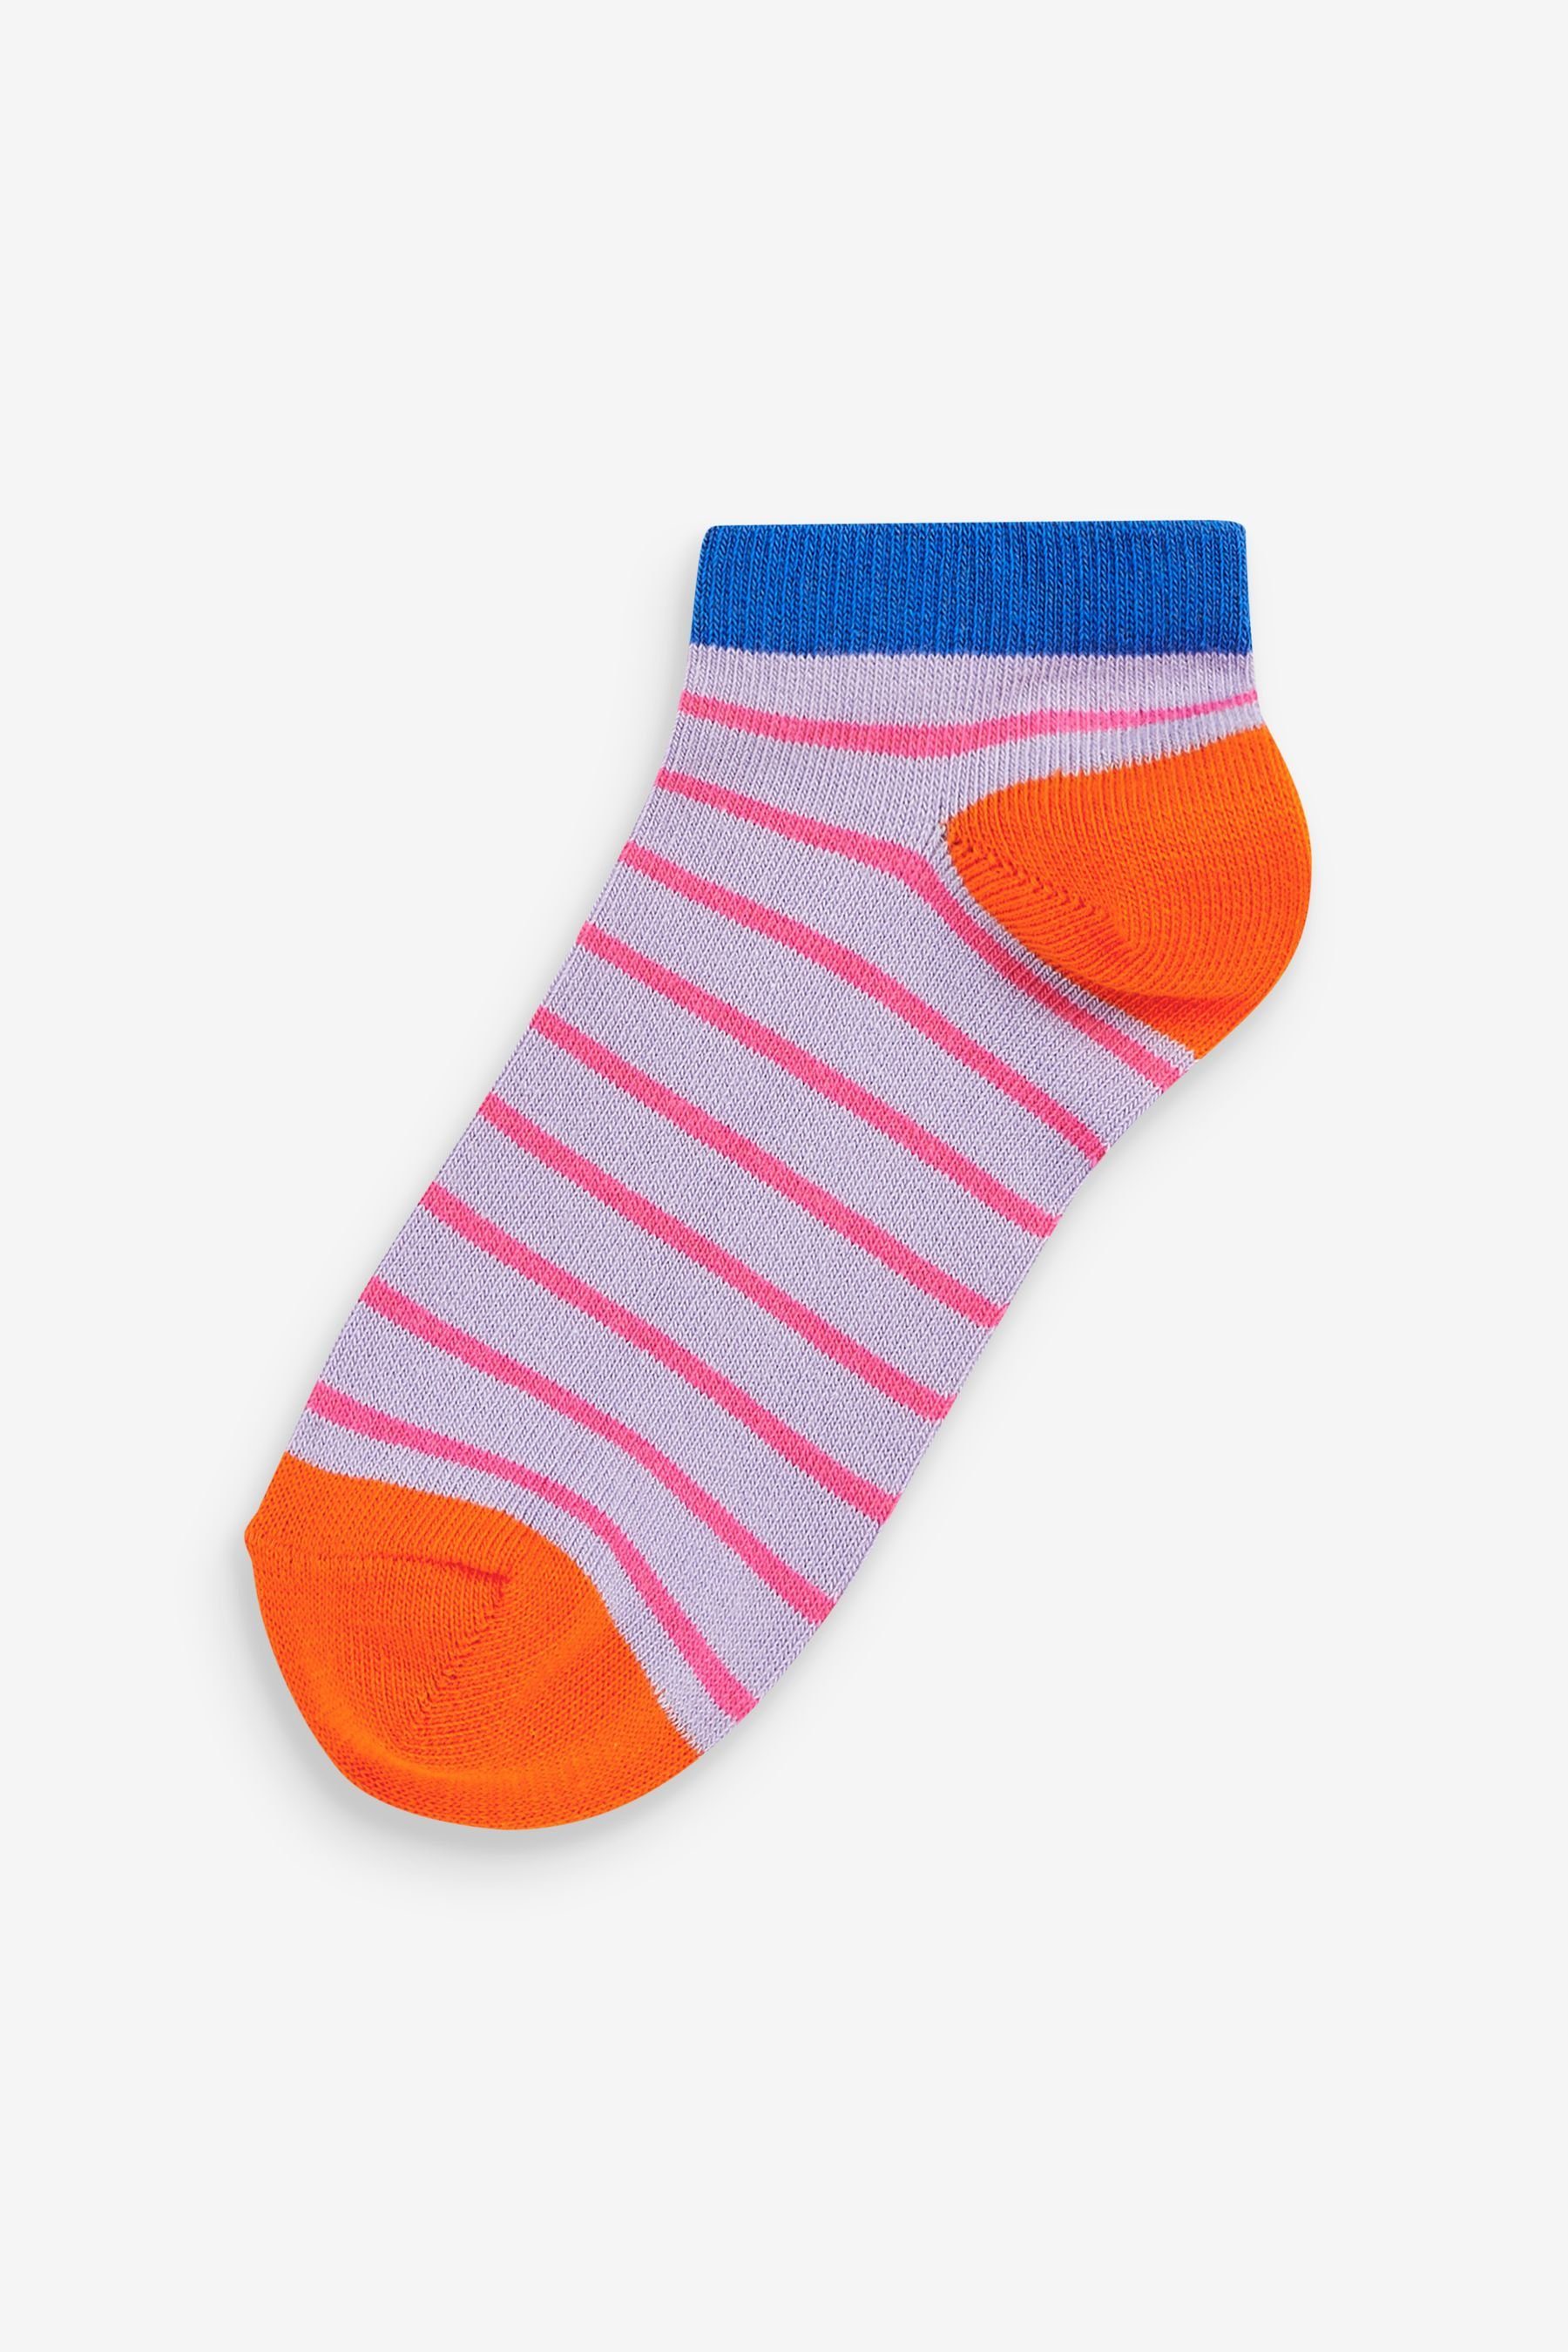 Wäsche/Bademode Socken Next Socken 5er-Pack Sneakersocken in leuchtenden Farben (5-Paar)